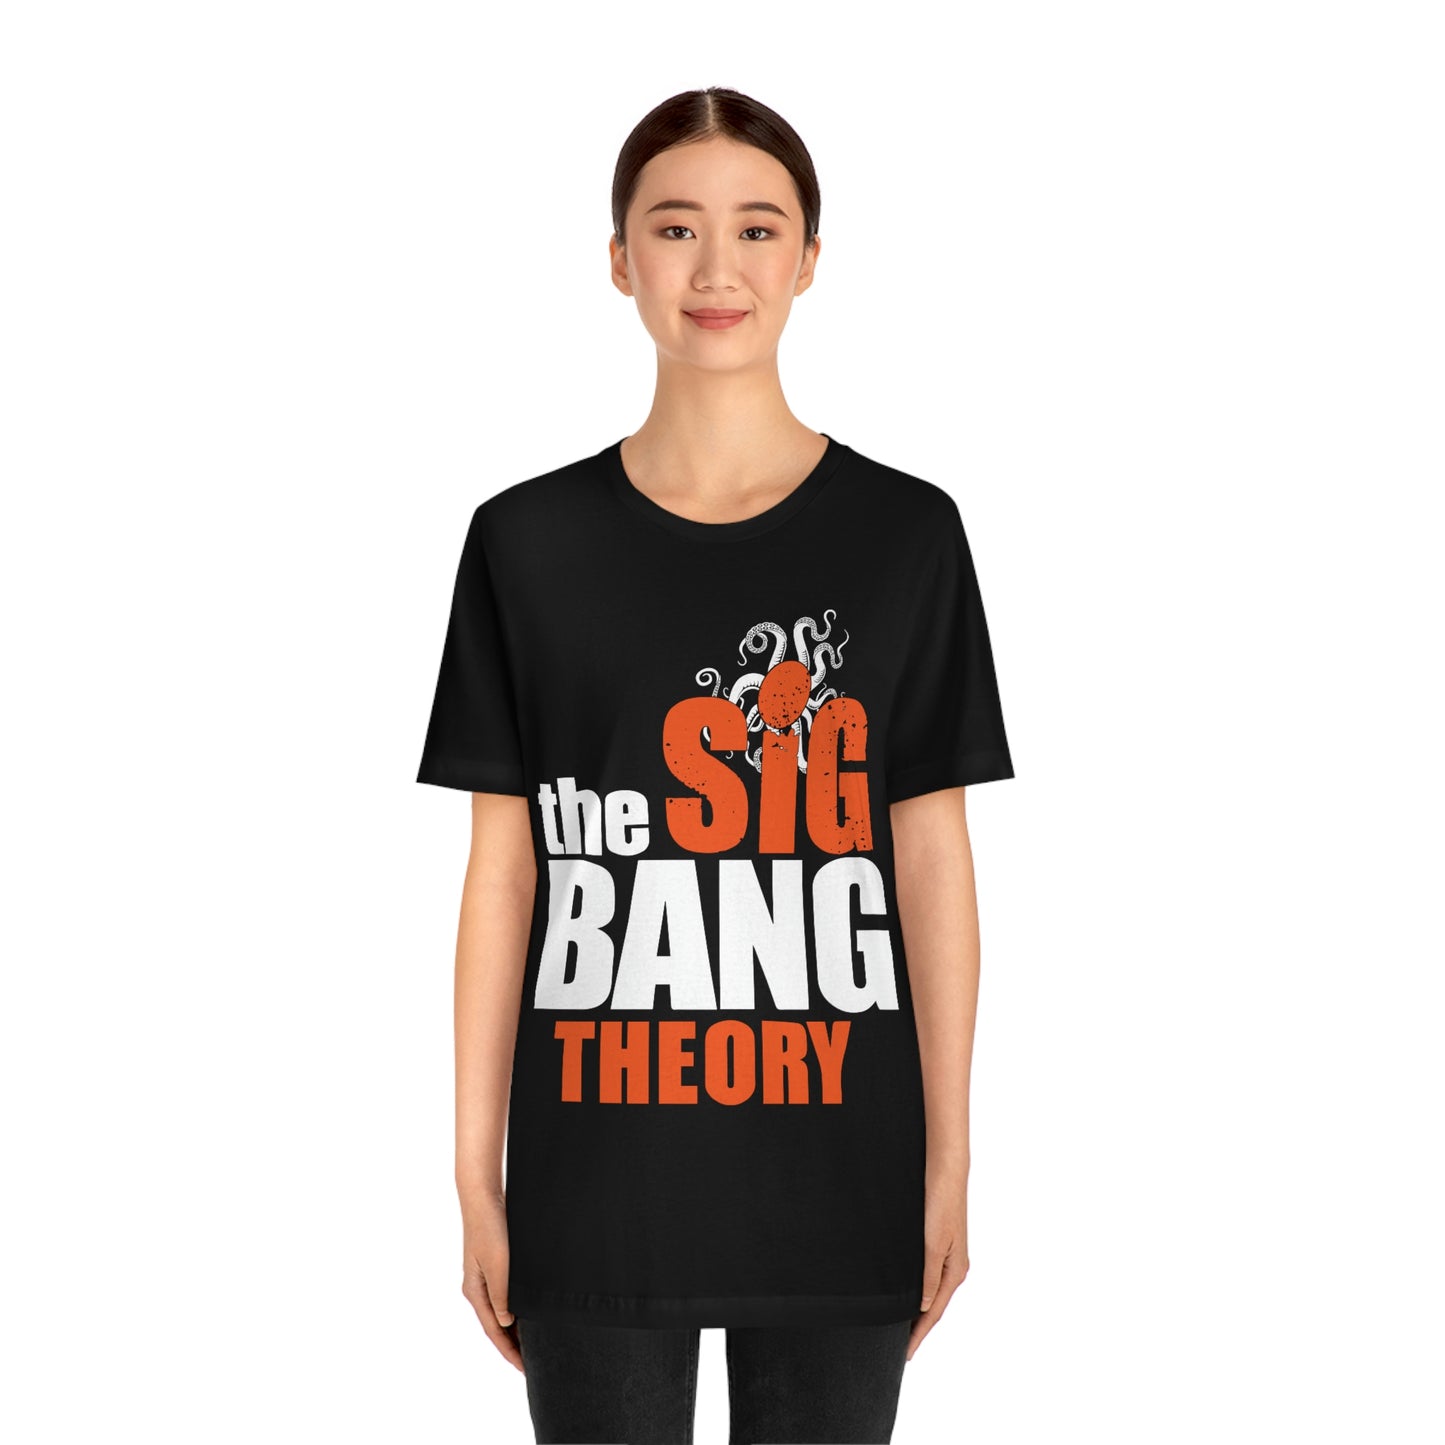 SiglerFest 2019: The Sig Bang Theory